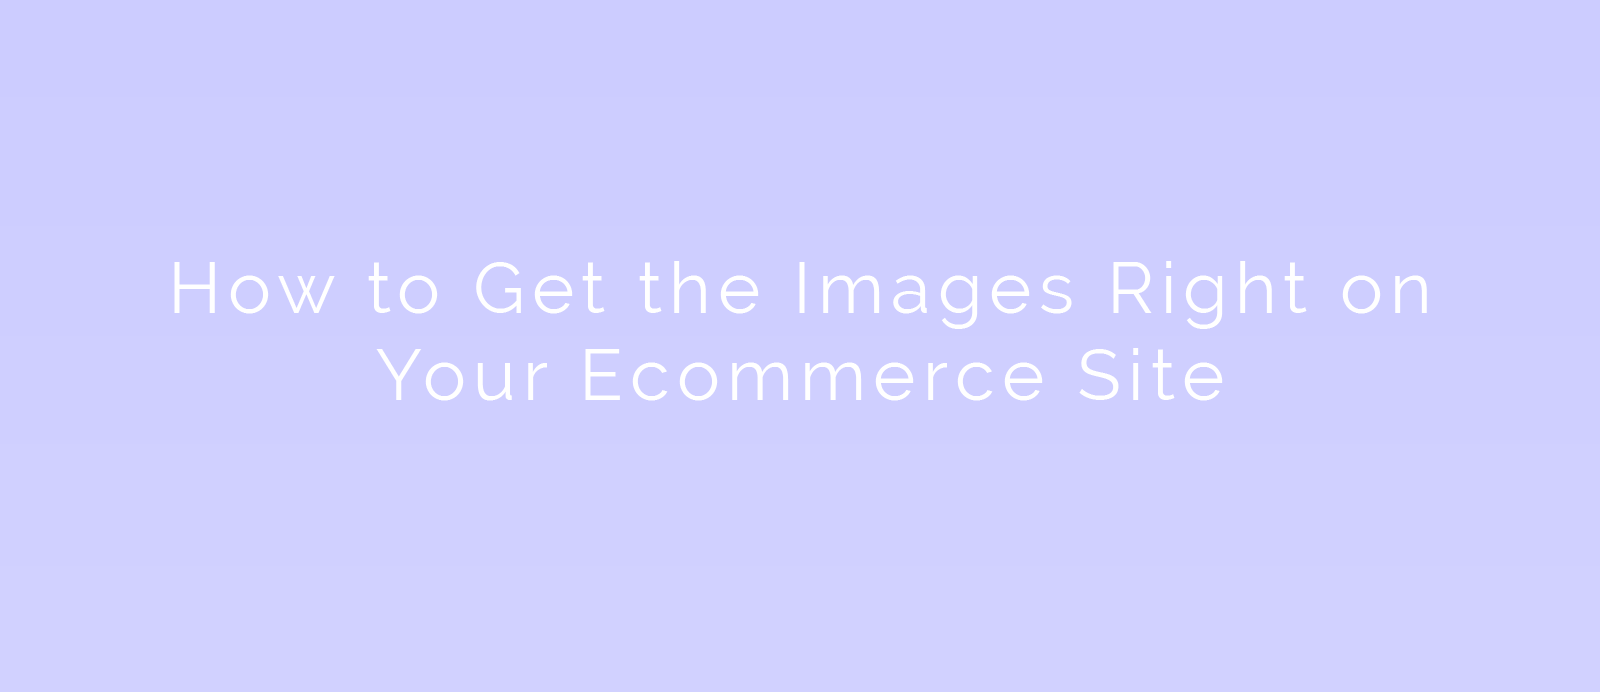 ecommerce images